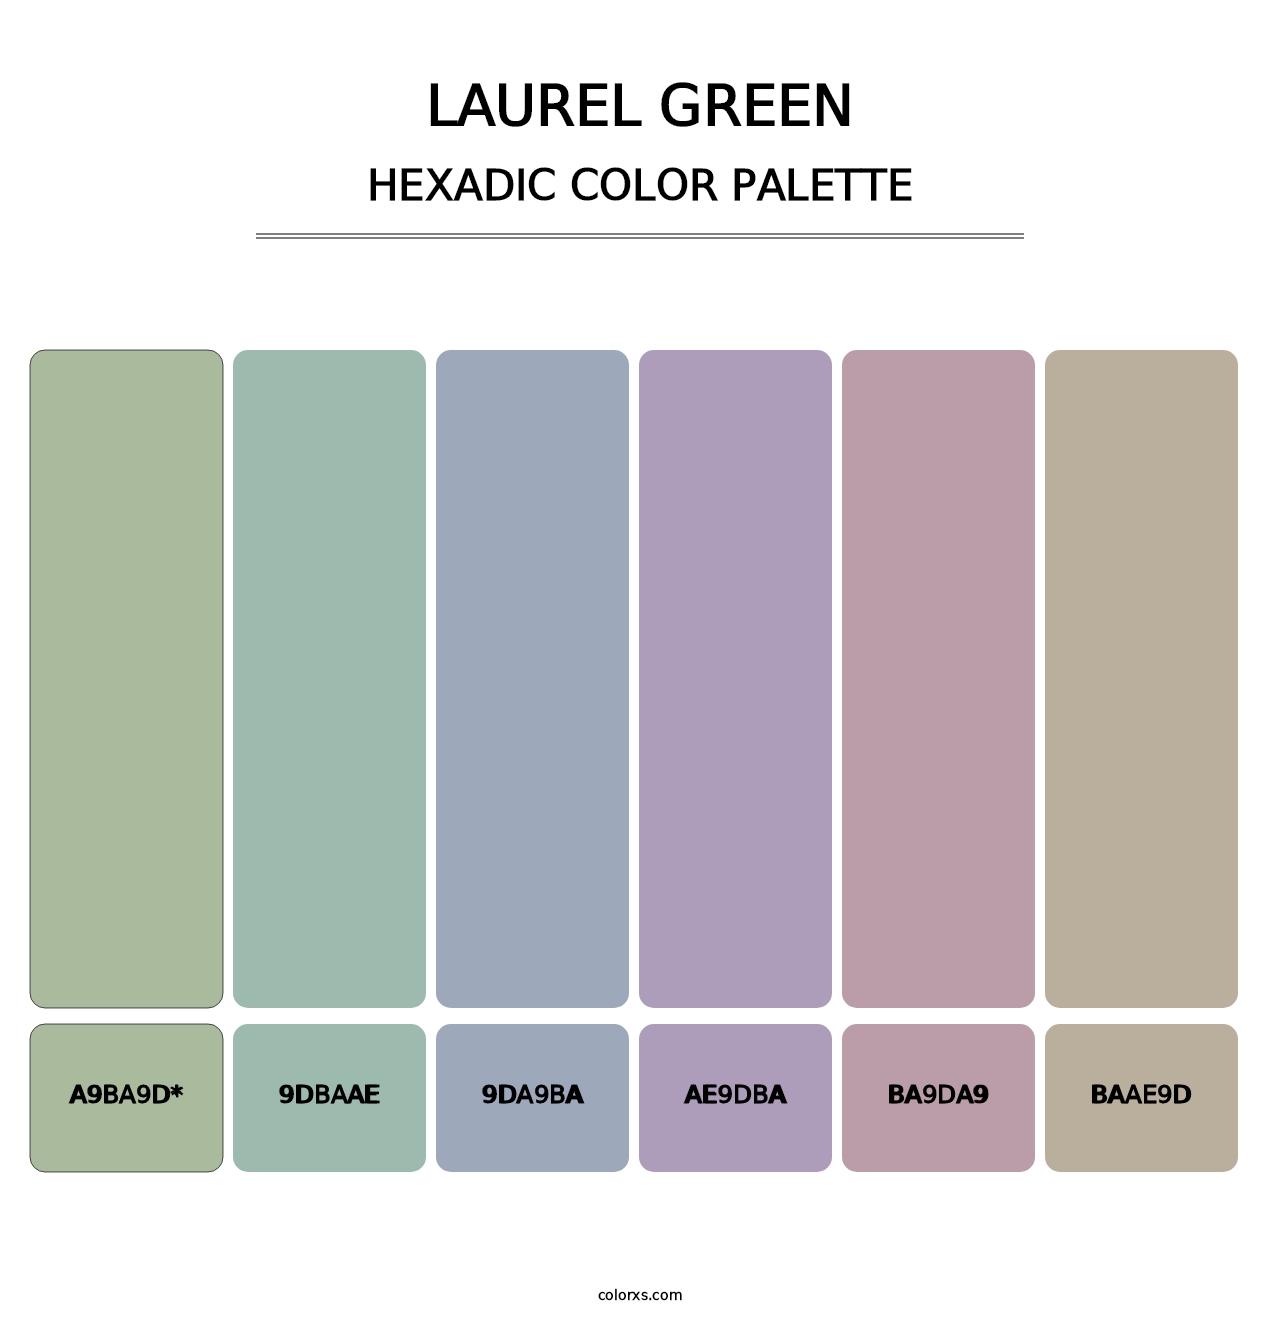 Laurel Green - Hexadic Color Palette